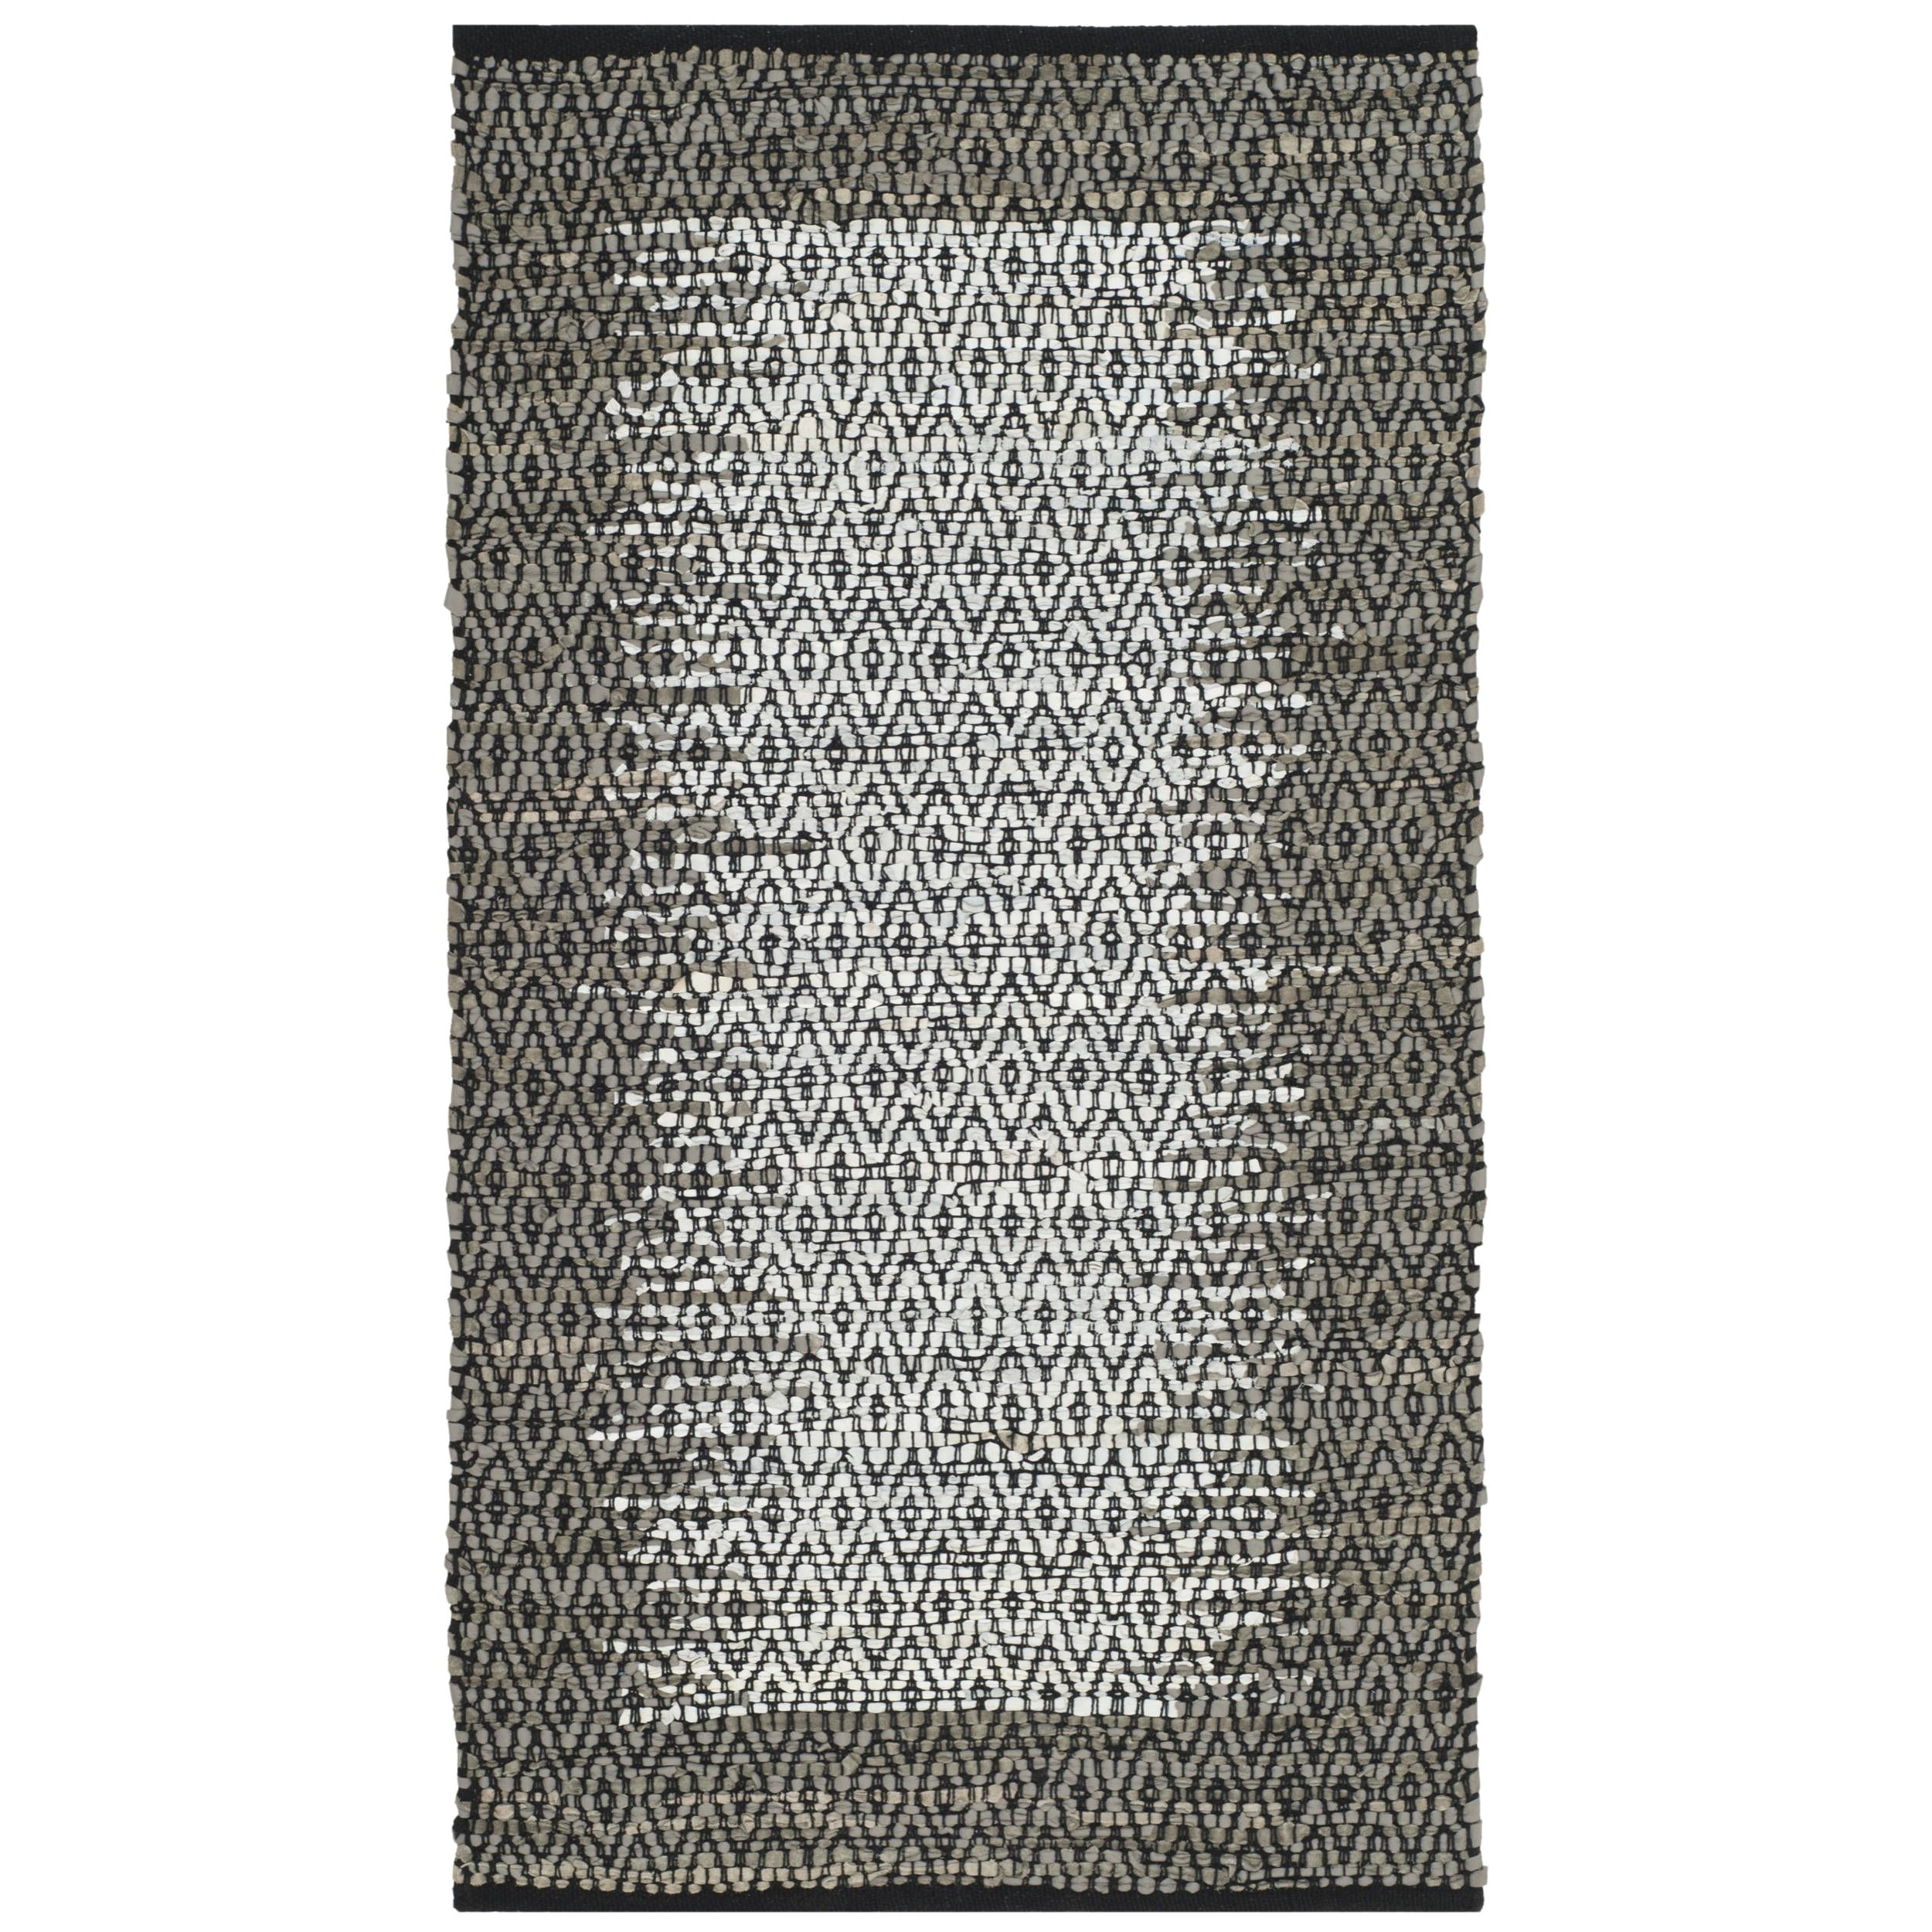 safavieh vintage leather handwoven modern geometric light grey grey area rug 2 3 x 4 vtl387a 24 size 2 x 4